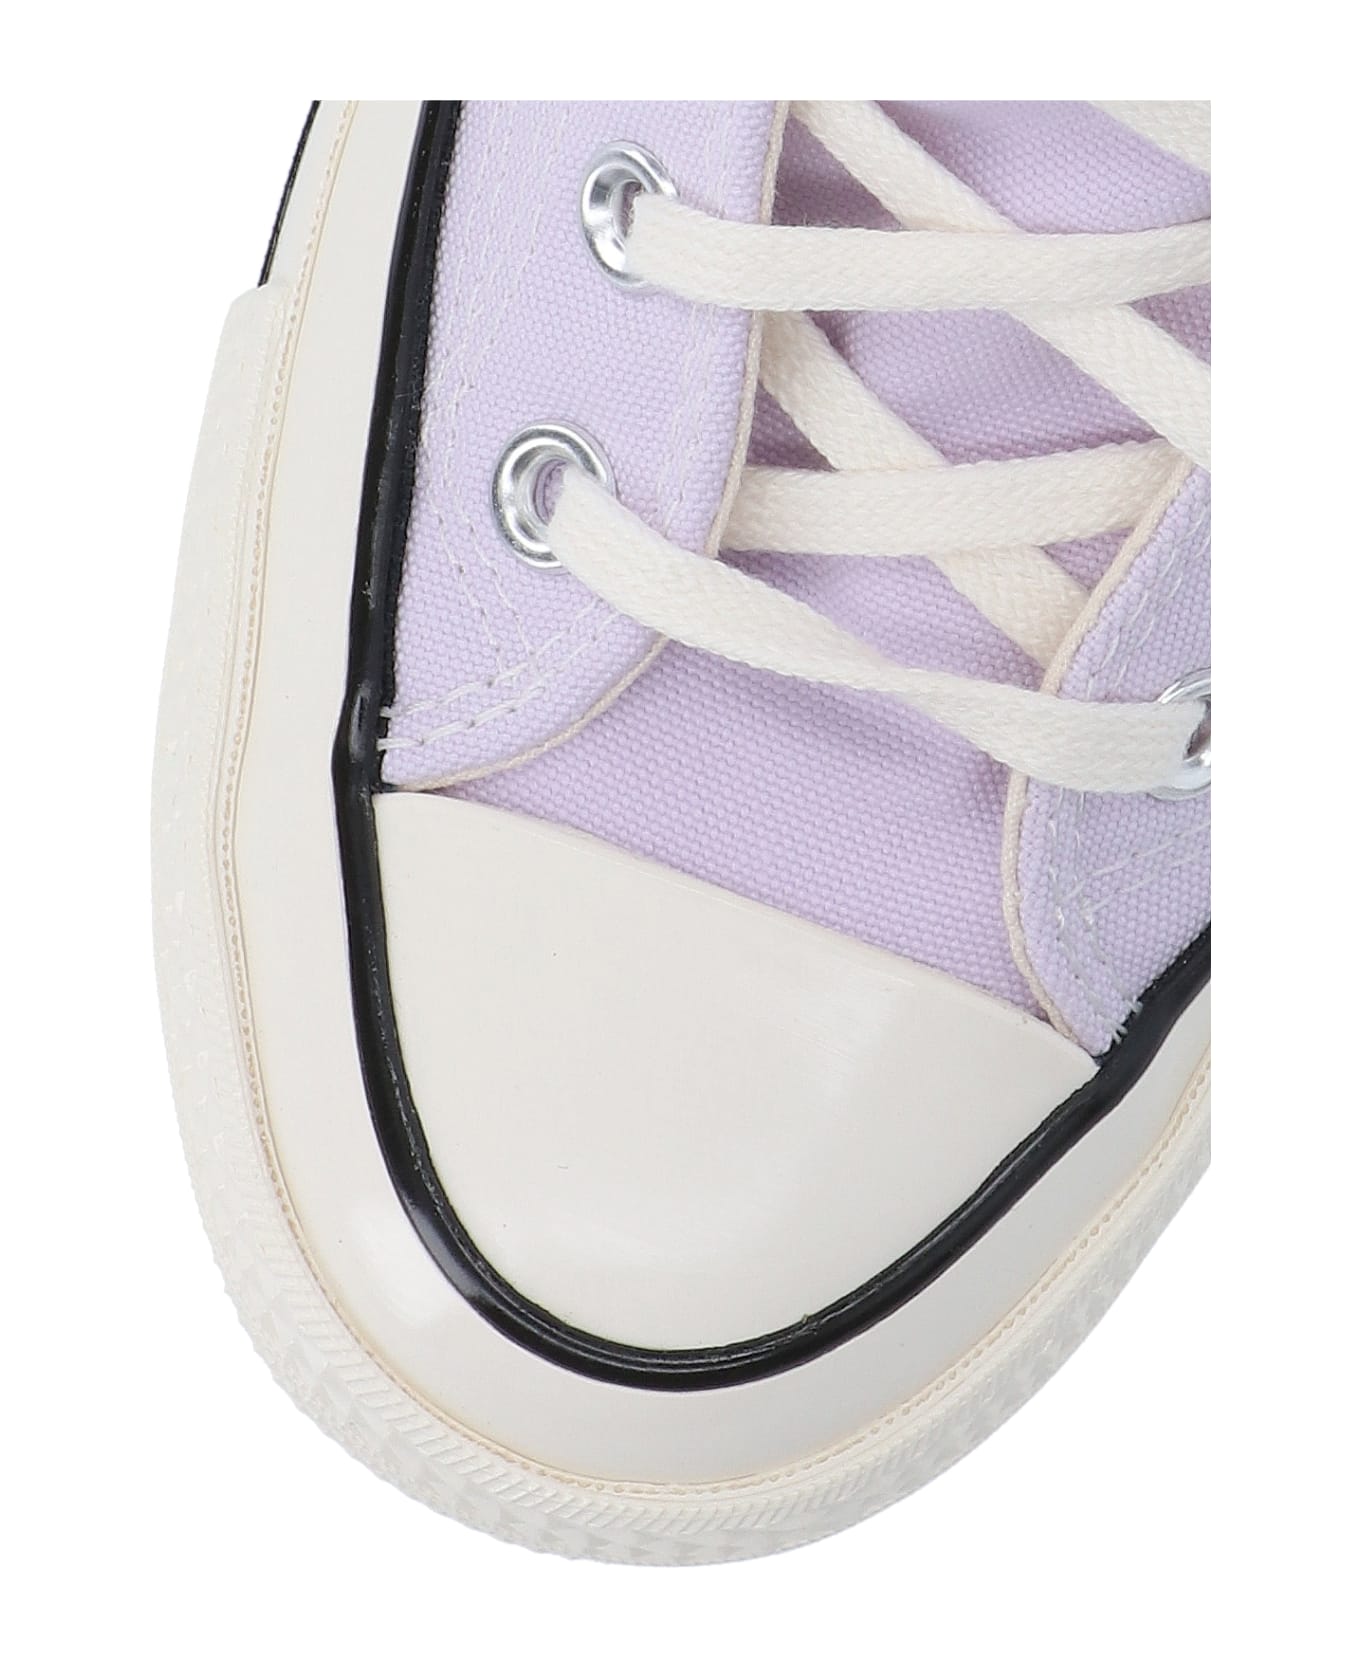 Converse 'chunk 70 Vintage Canvas' Sneakers - Purple